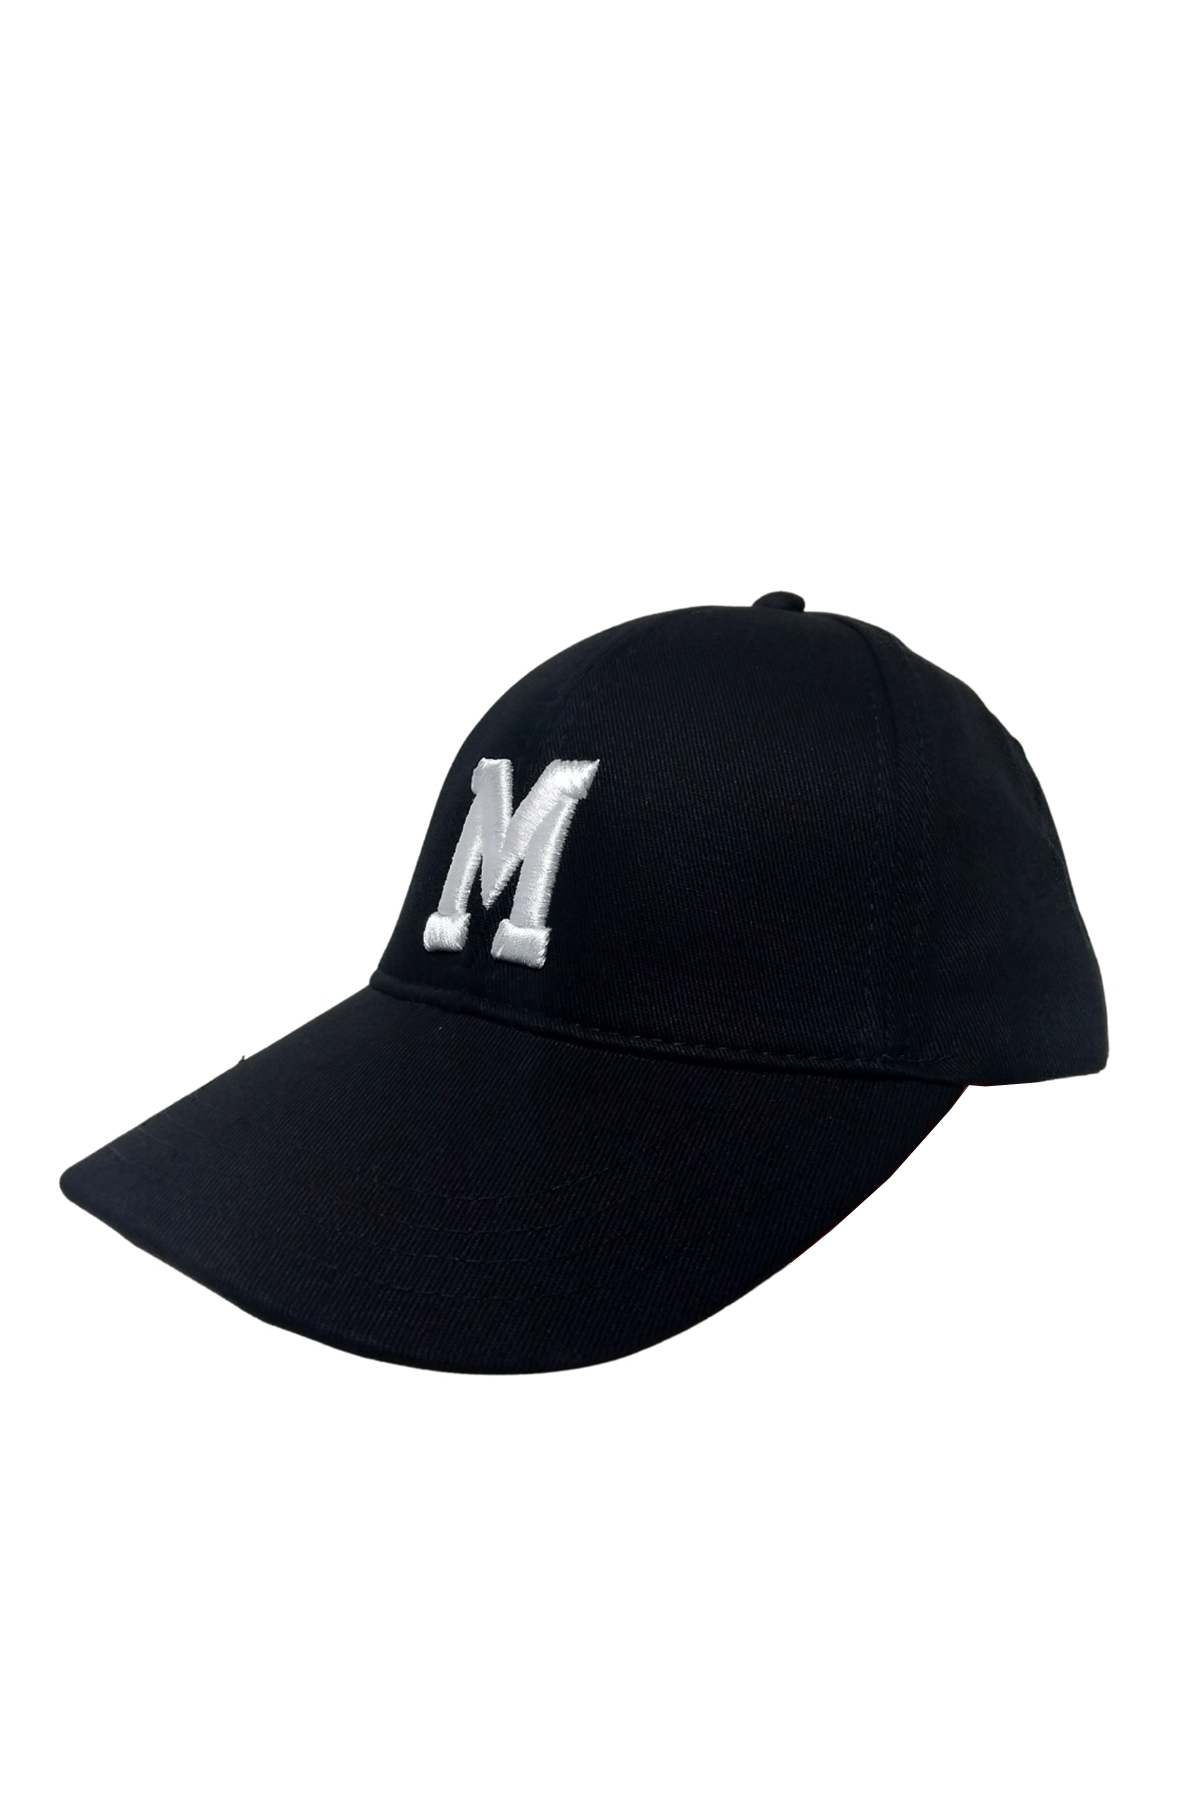 Syt 220 - M Harfli Siyah Şapka